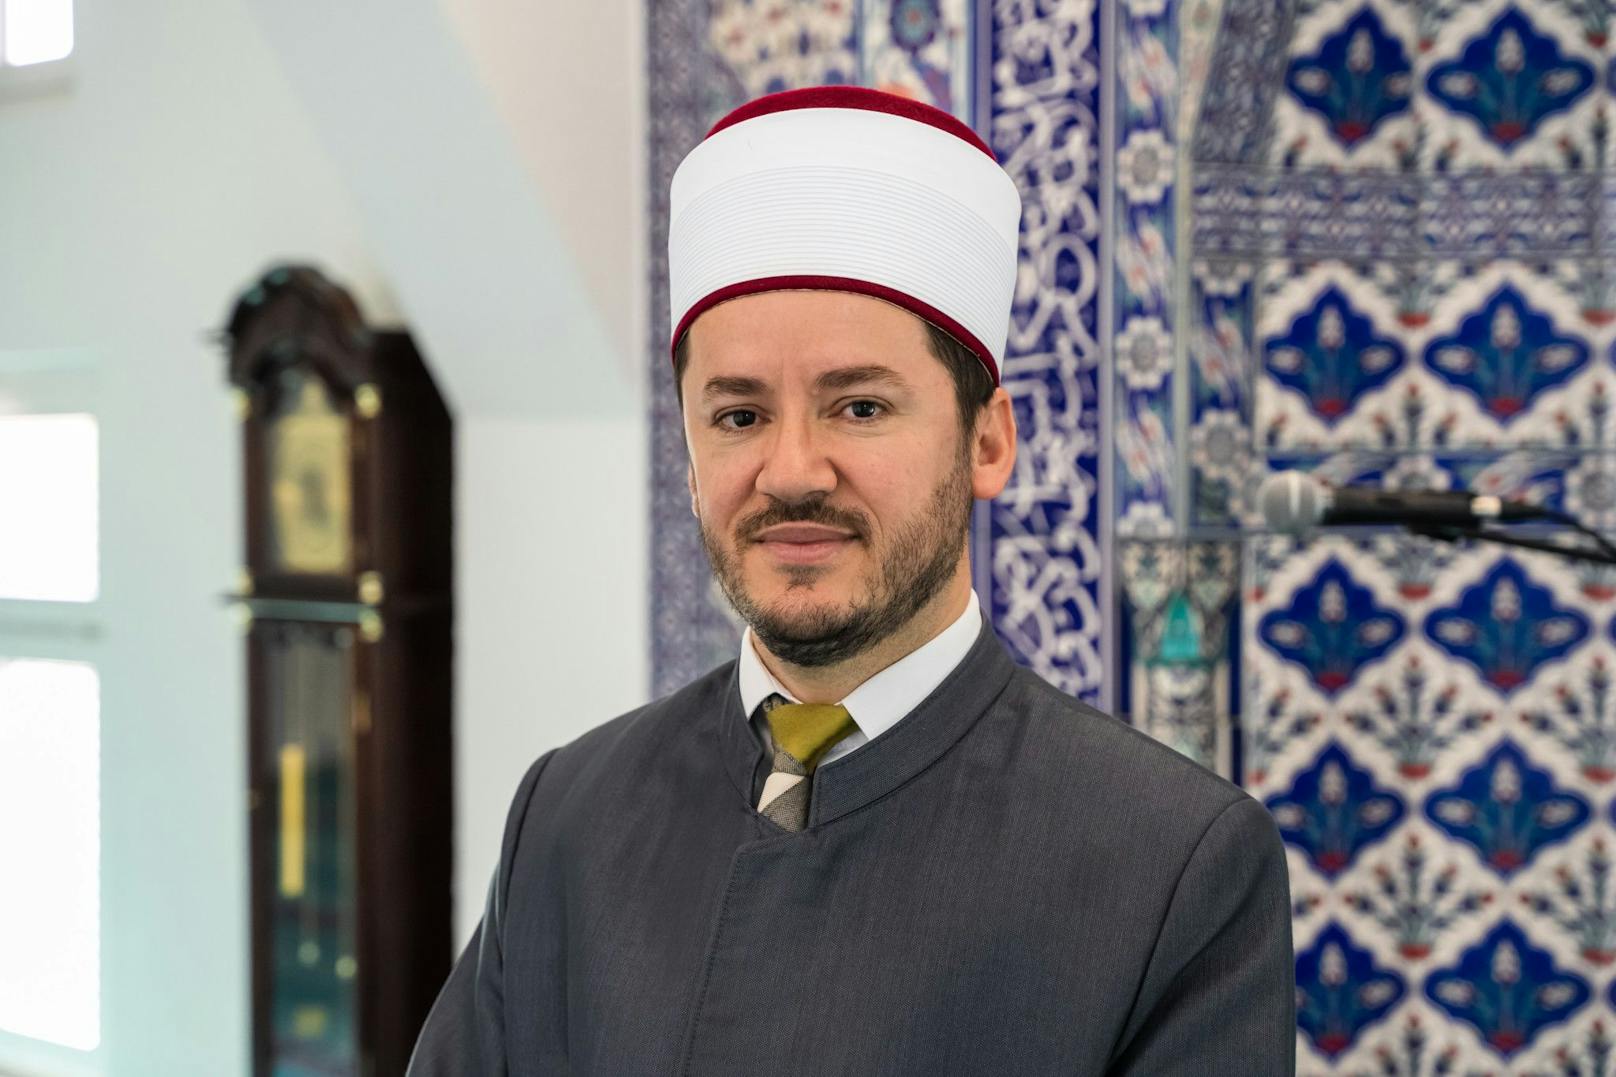  Burkini im Freibad – "liberaler" Imam packt jetzt aus